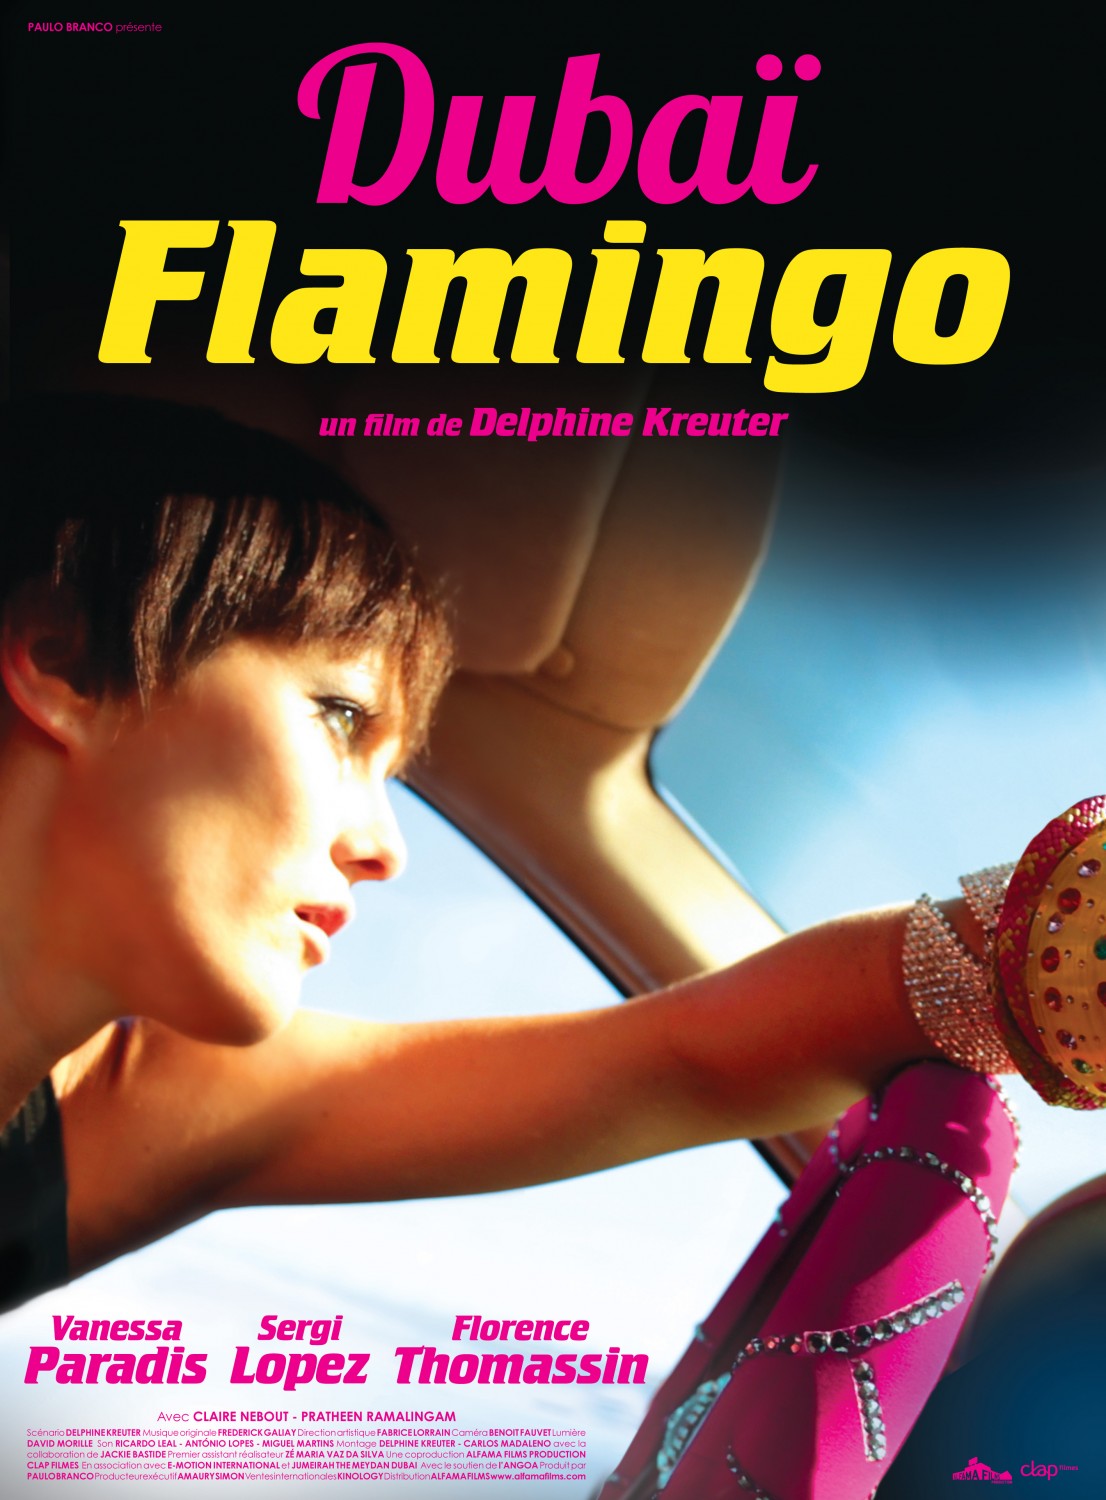 Extra Large Movie Poster Image for Dubaï Flamingo 